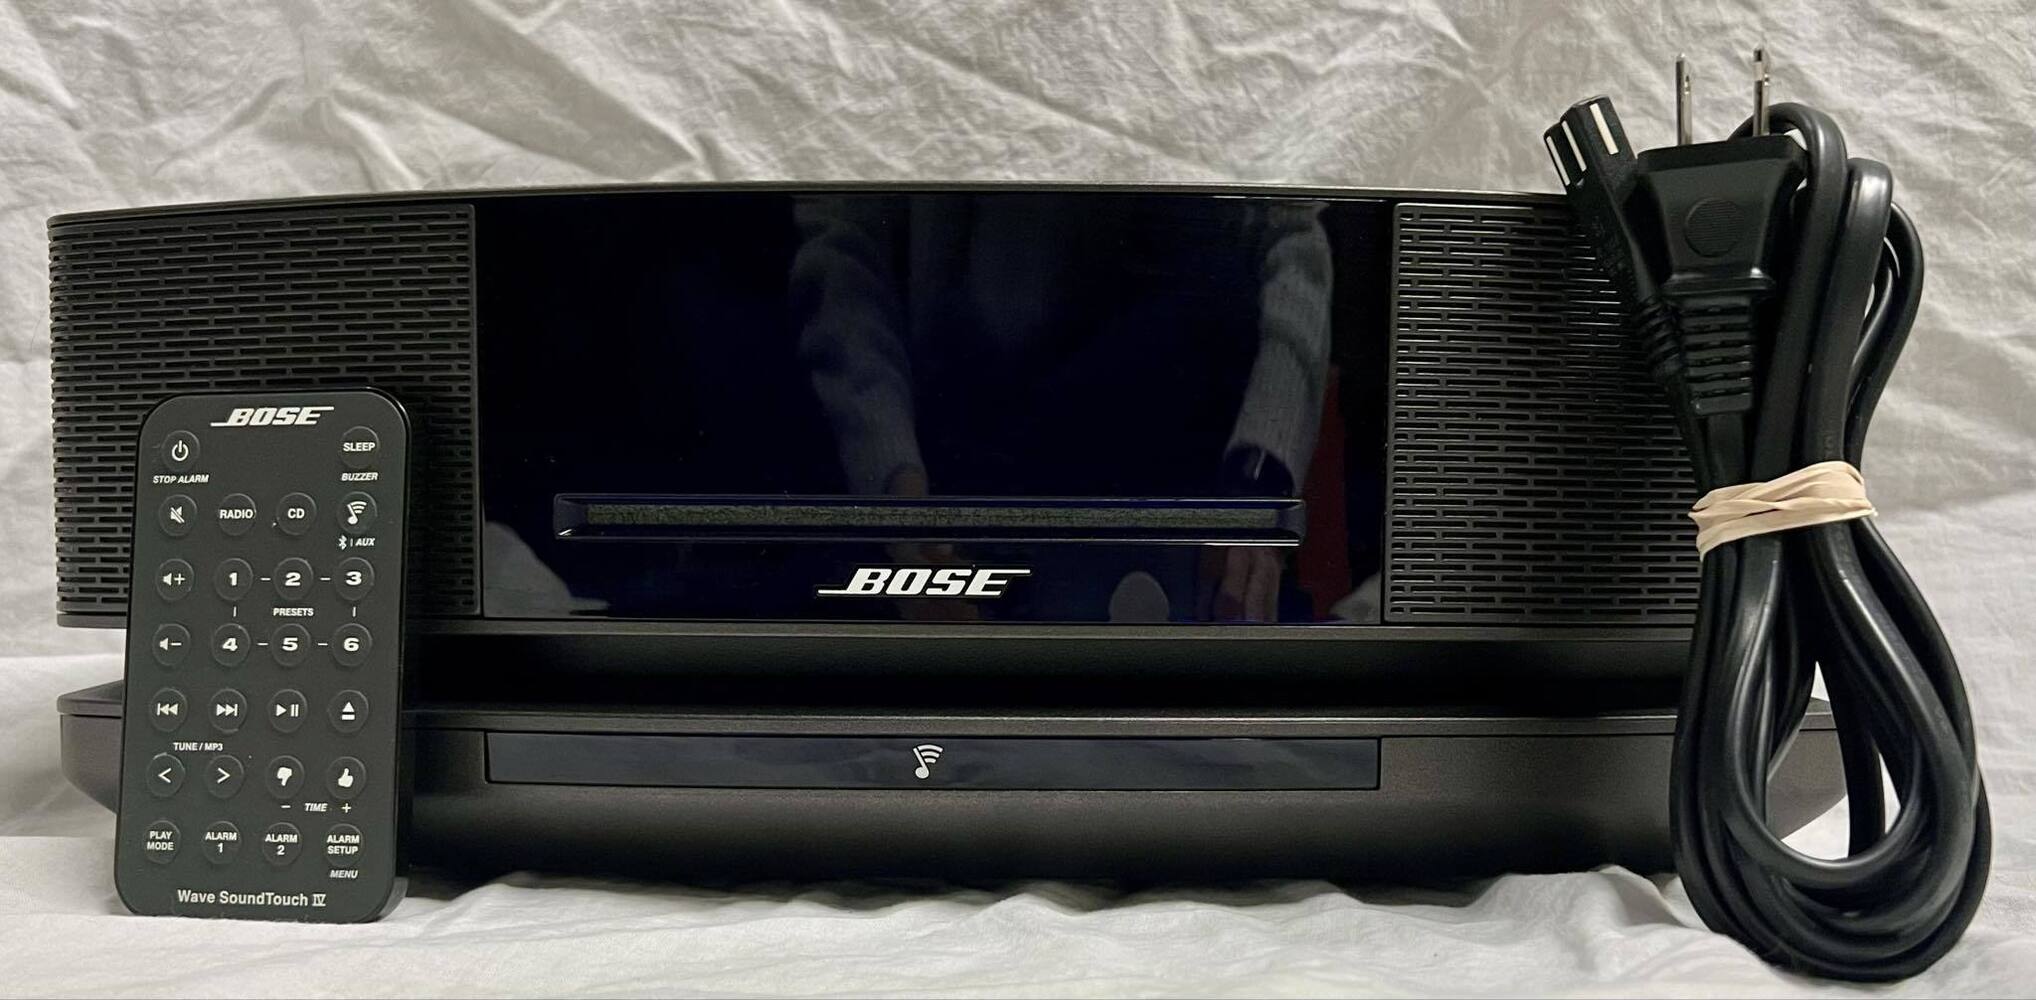 Bose Wave Music System IV Espresso Black CD Player w/ Remote & Pedestal - WORKS